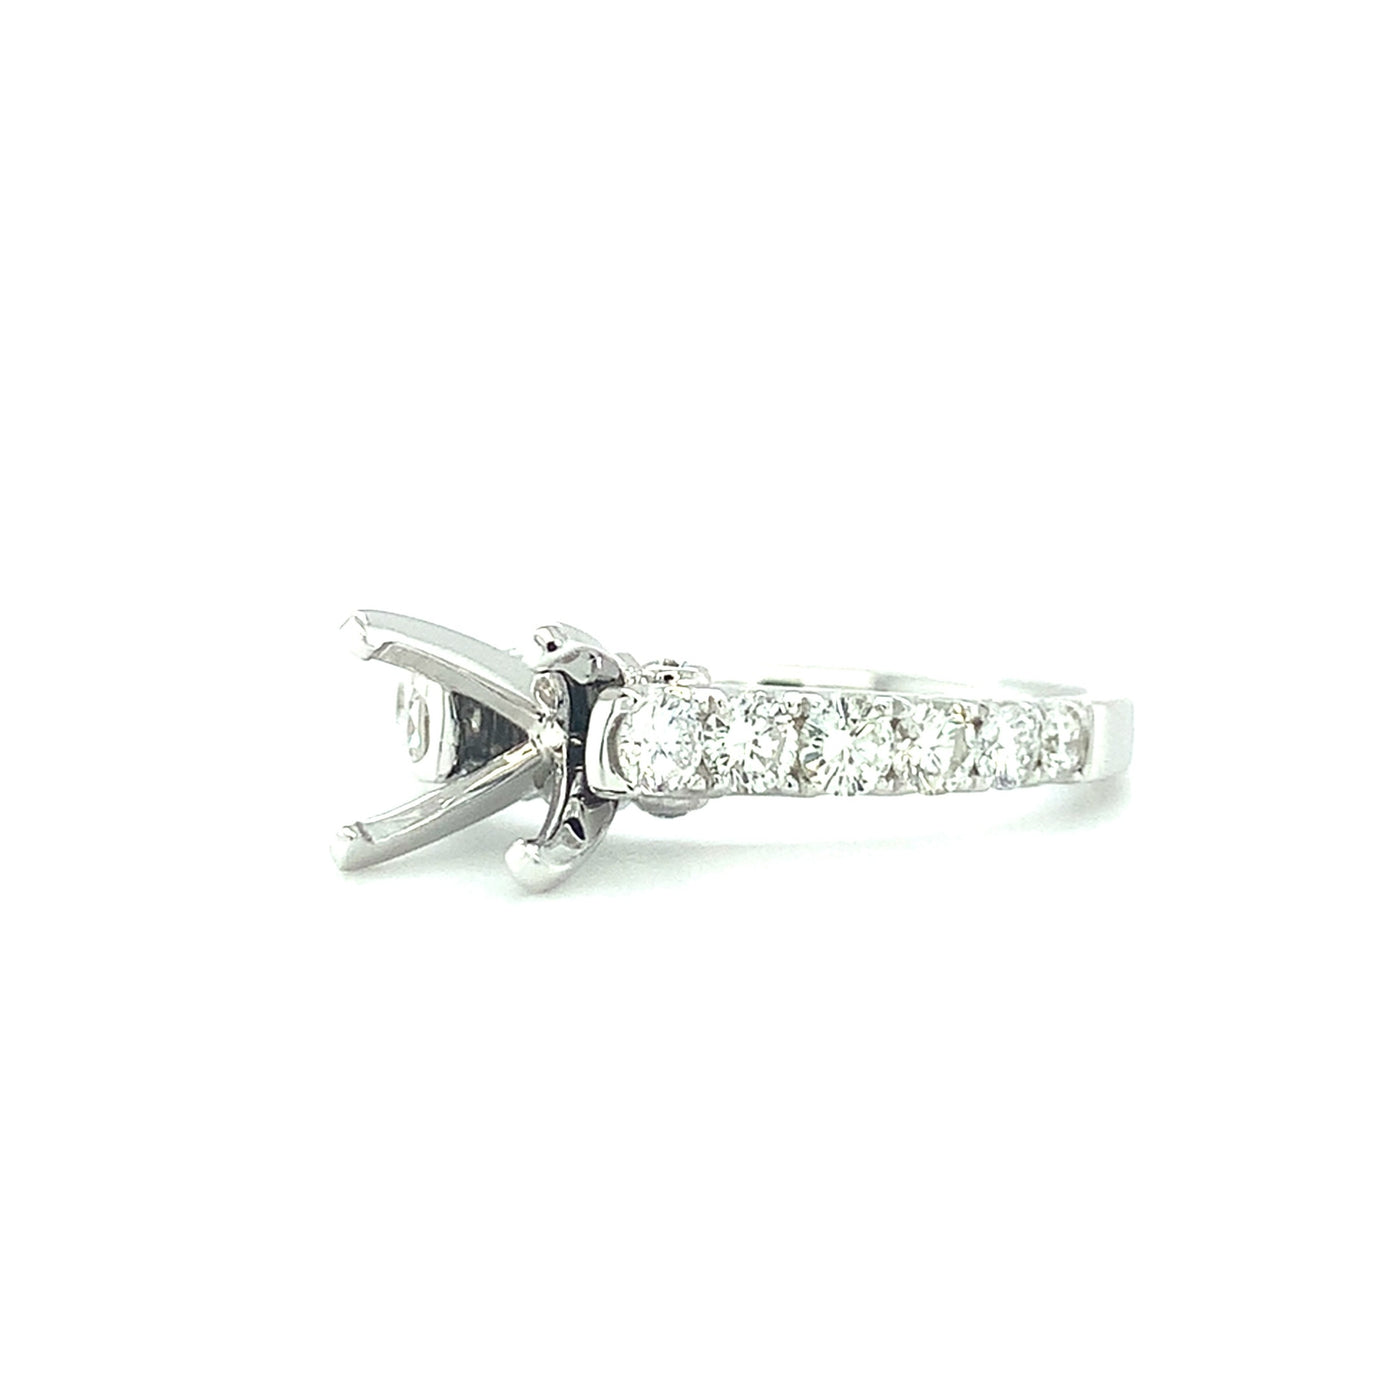 Amore's .71 Carat Diamond Engagement Ring Setting